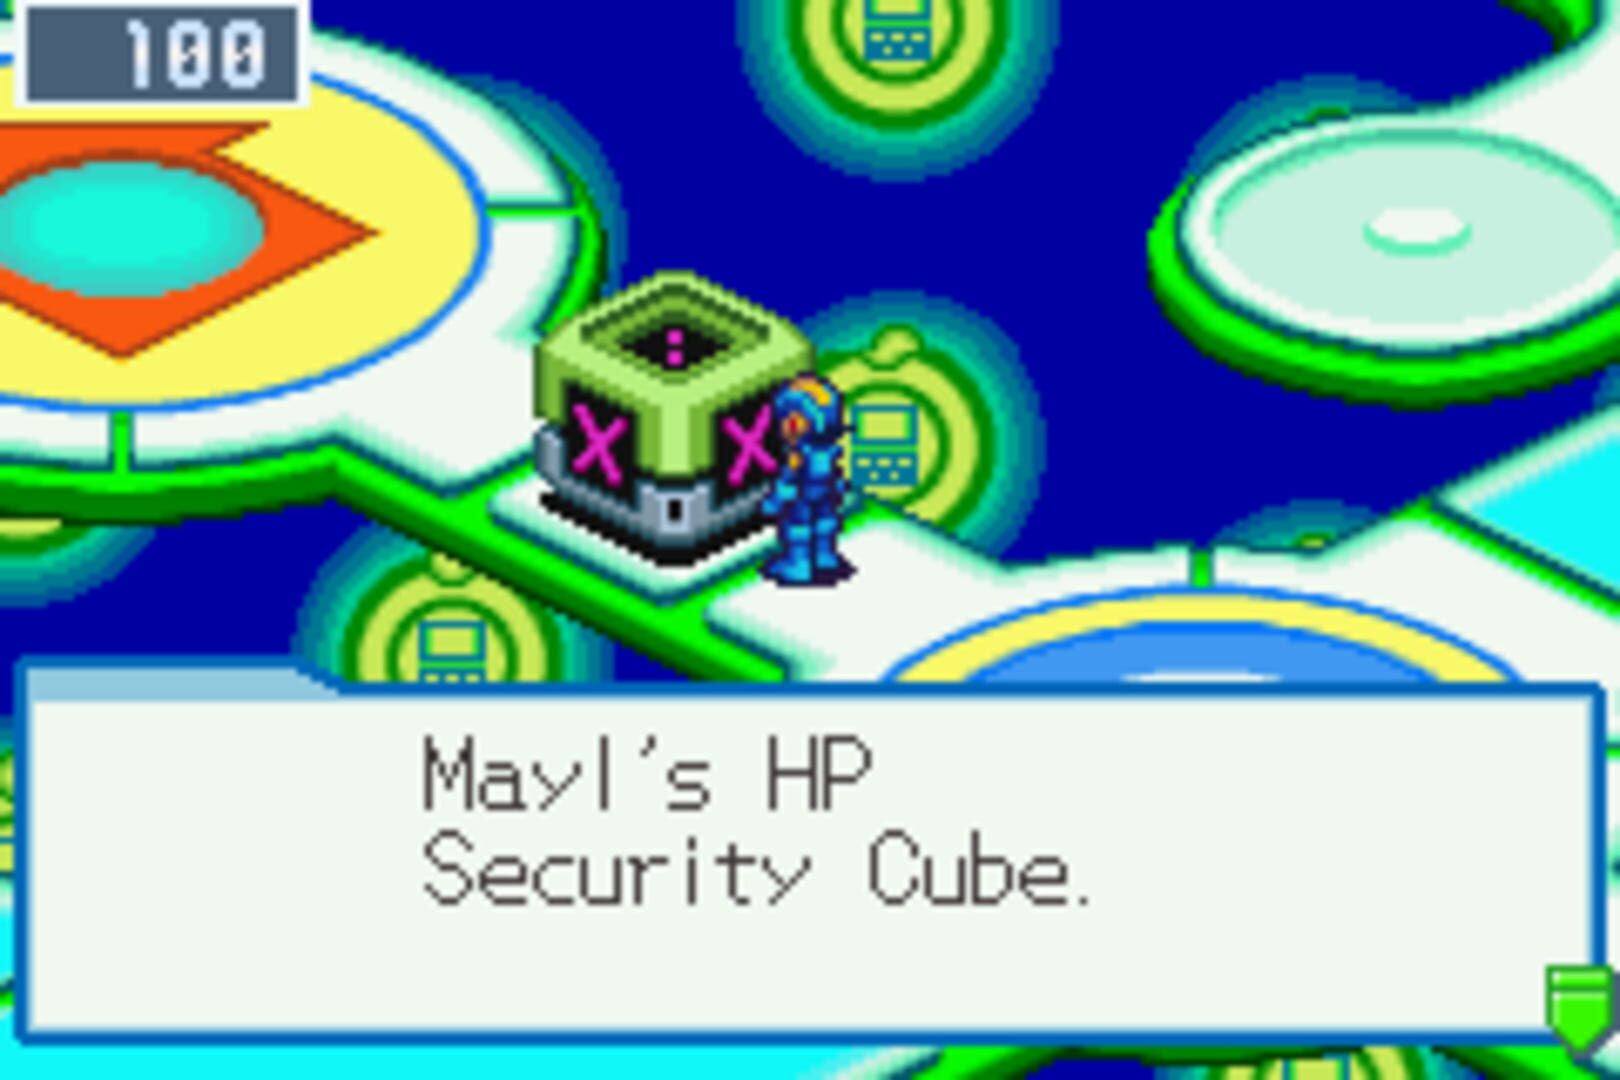 Captura de pantalla - Mega Man Battle Network 4: Red Sun